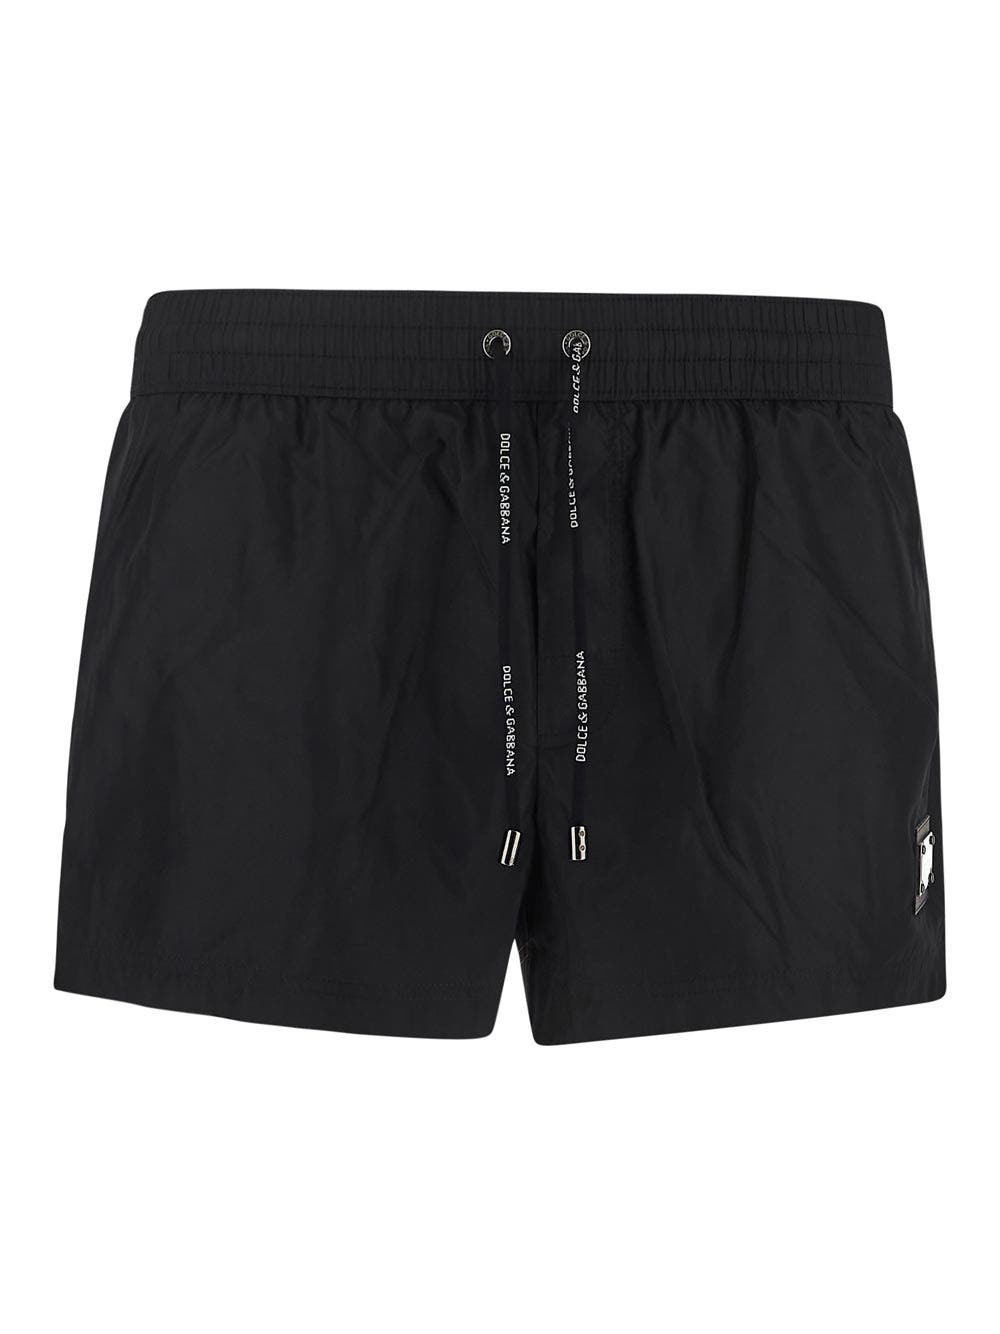 Pants Kappa Vant - Slocog wear - Brands - Dolce & Gabbana striped  knee-length shorts